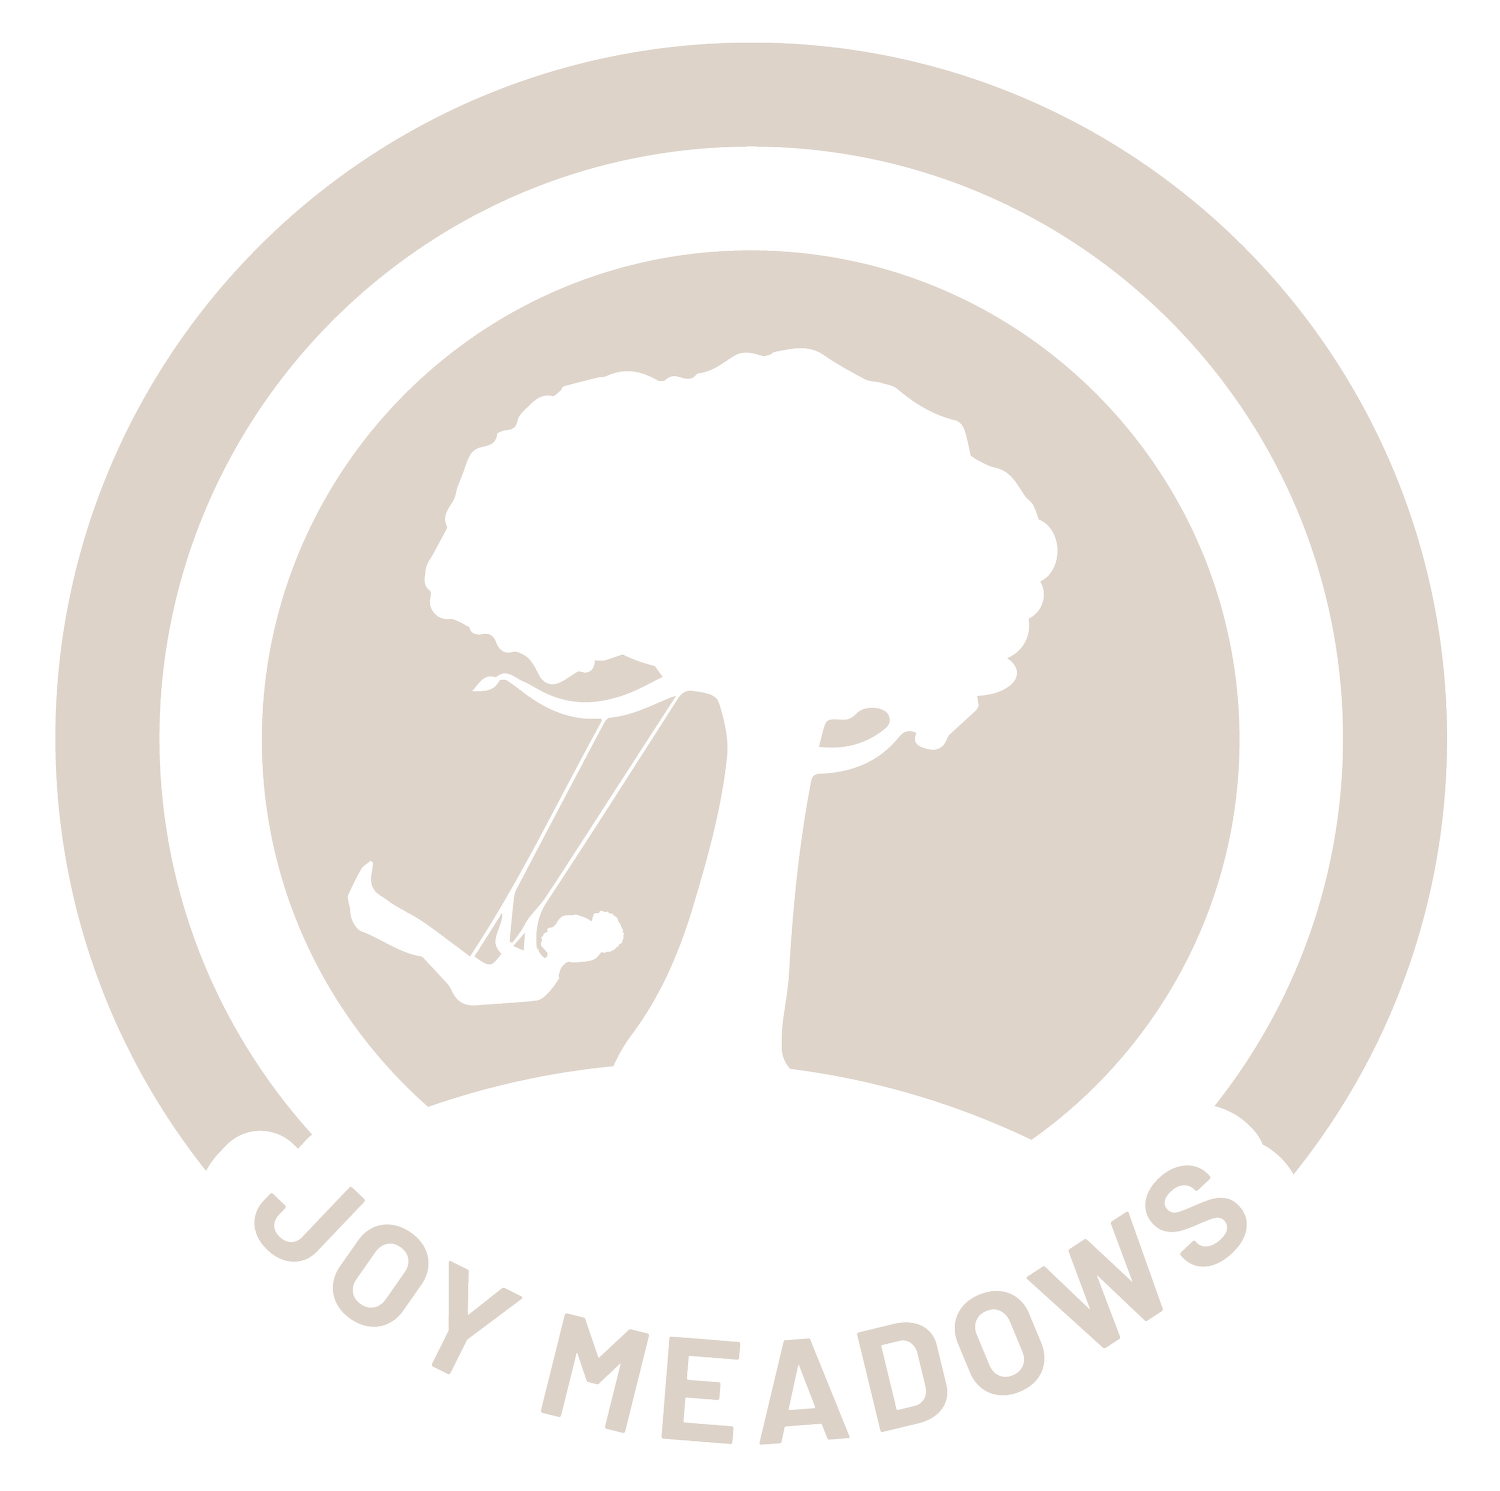 Joy Meadows